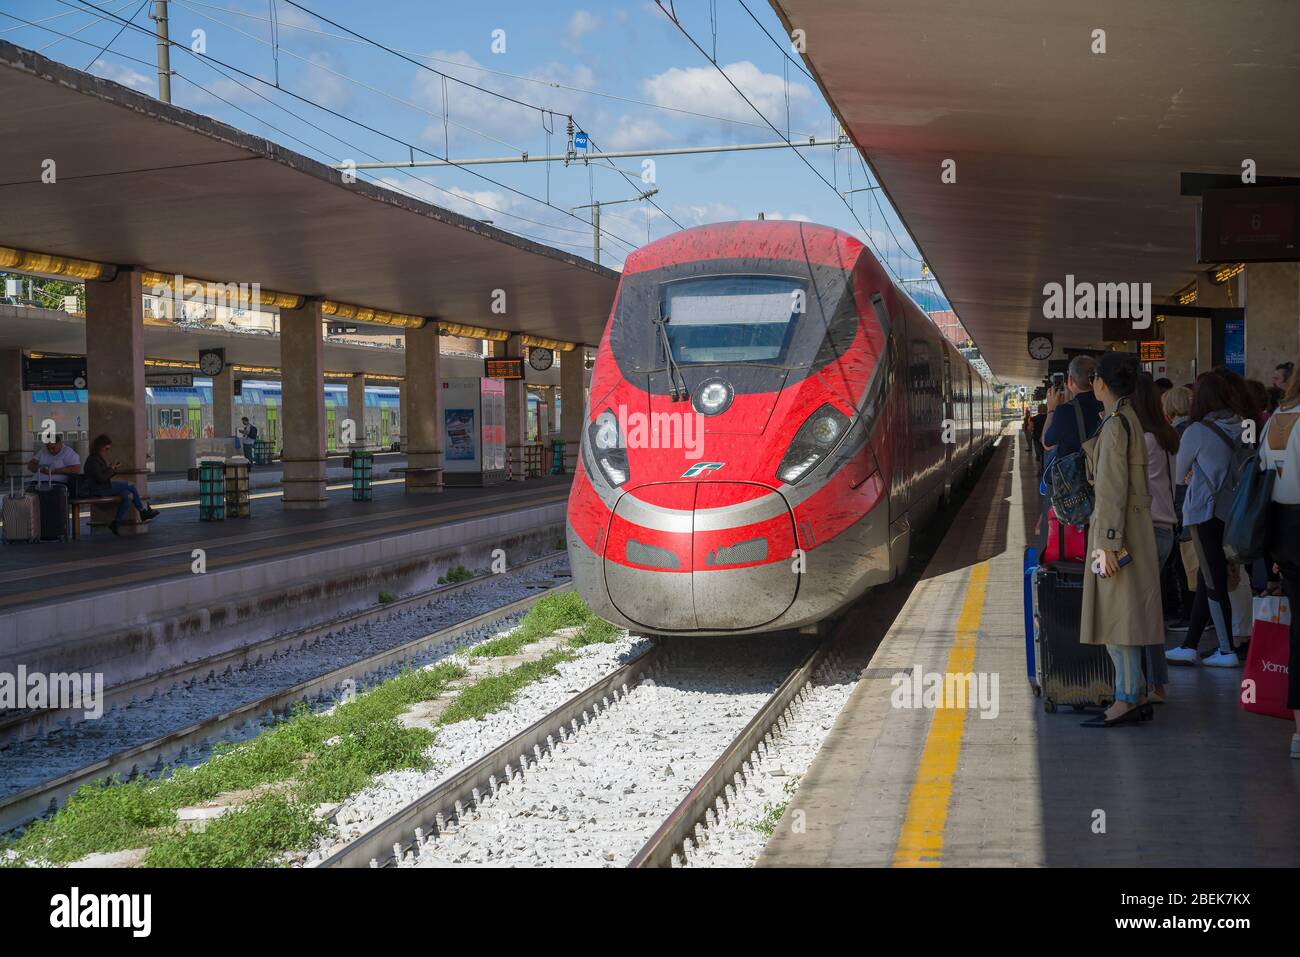 FLORENCE, ITALY - DECEMBER 25, 2017: Trenitalia Frecciarossa ETR 1000 high-speed passenger train arrives on the platform of the central railway statio Stock Photo